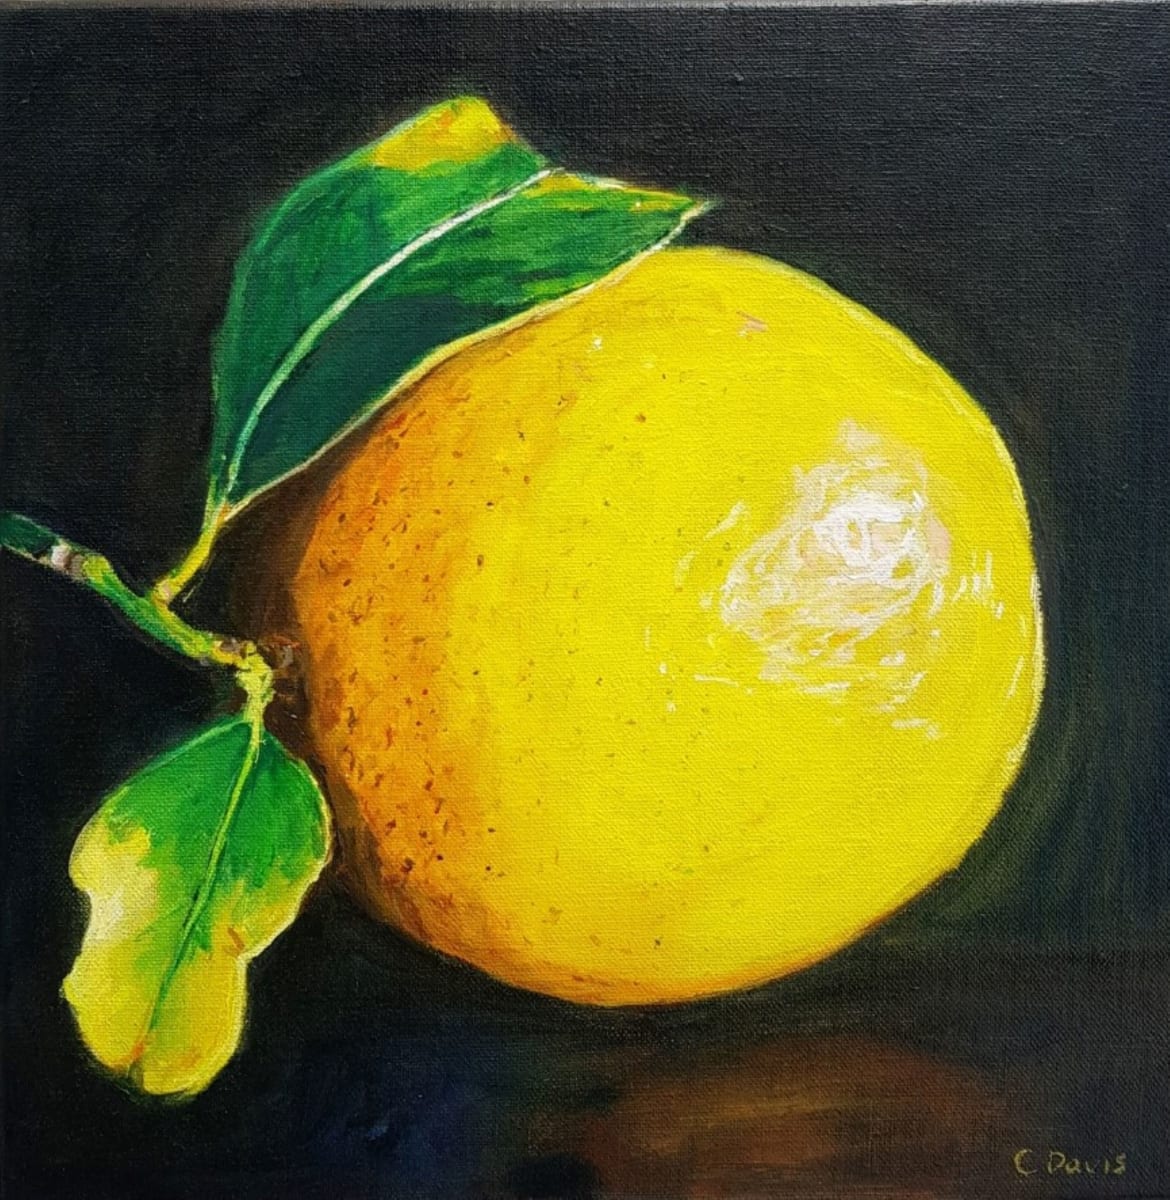 Lemon by Christine Davis  Image: Lemon oil painting